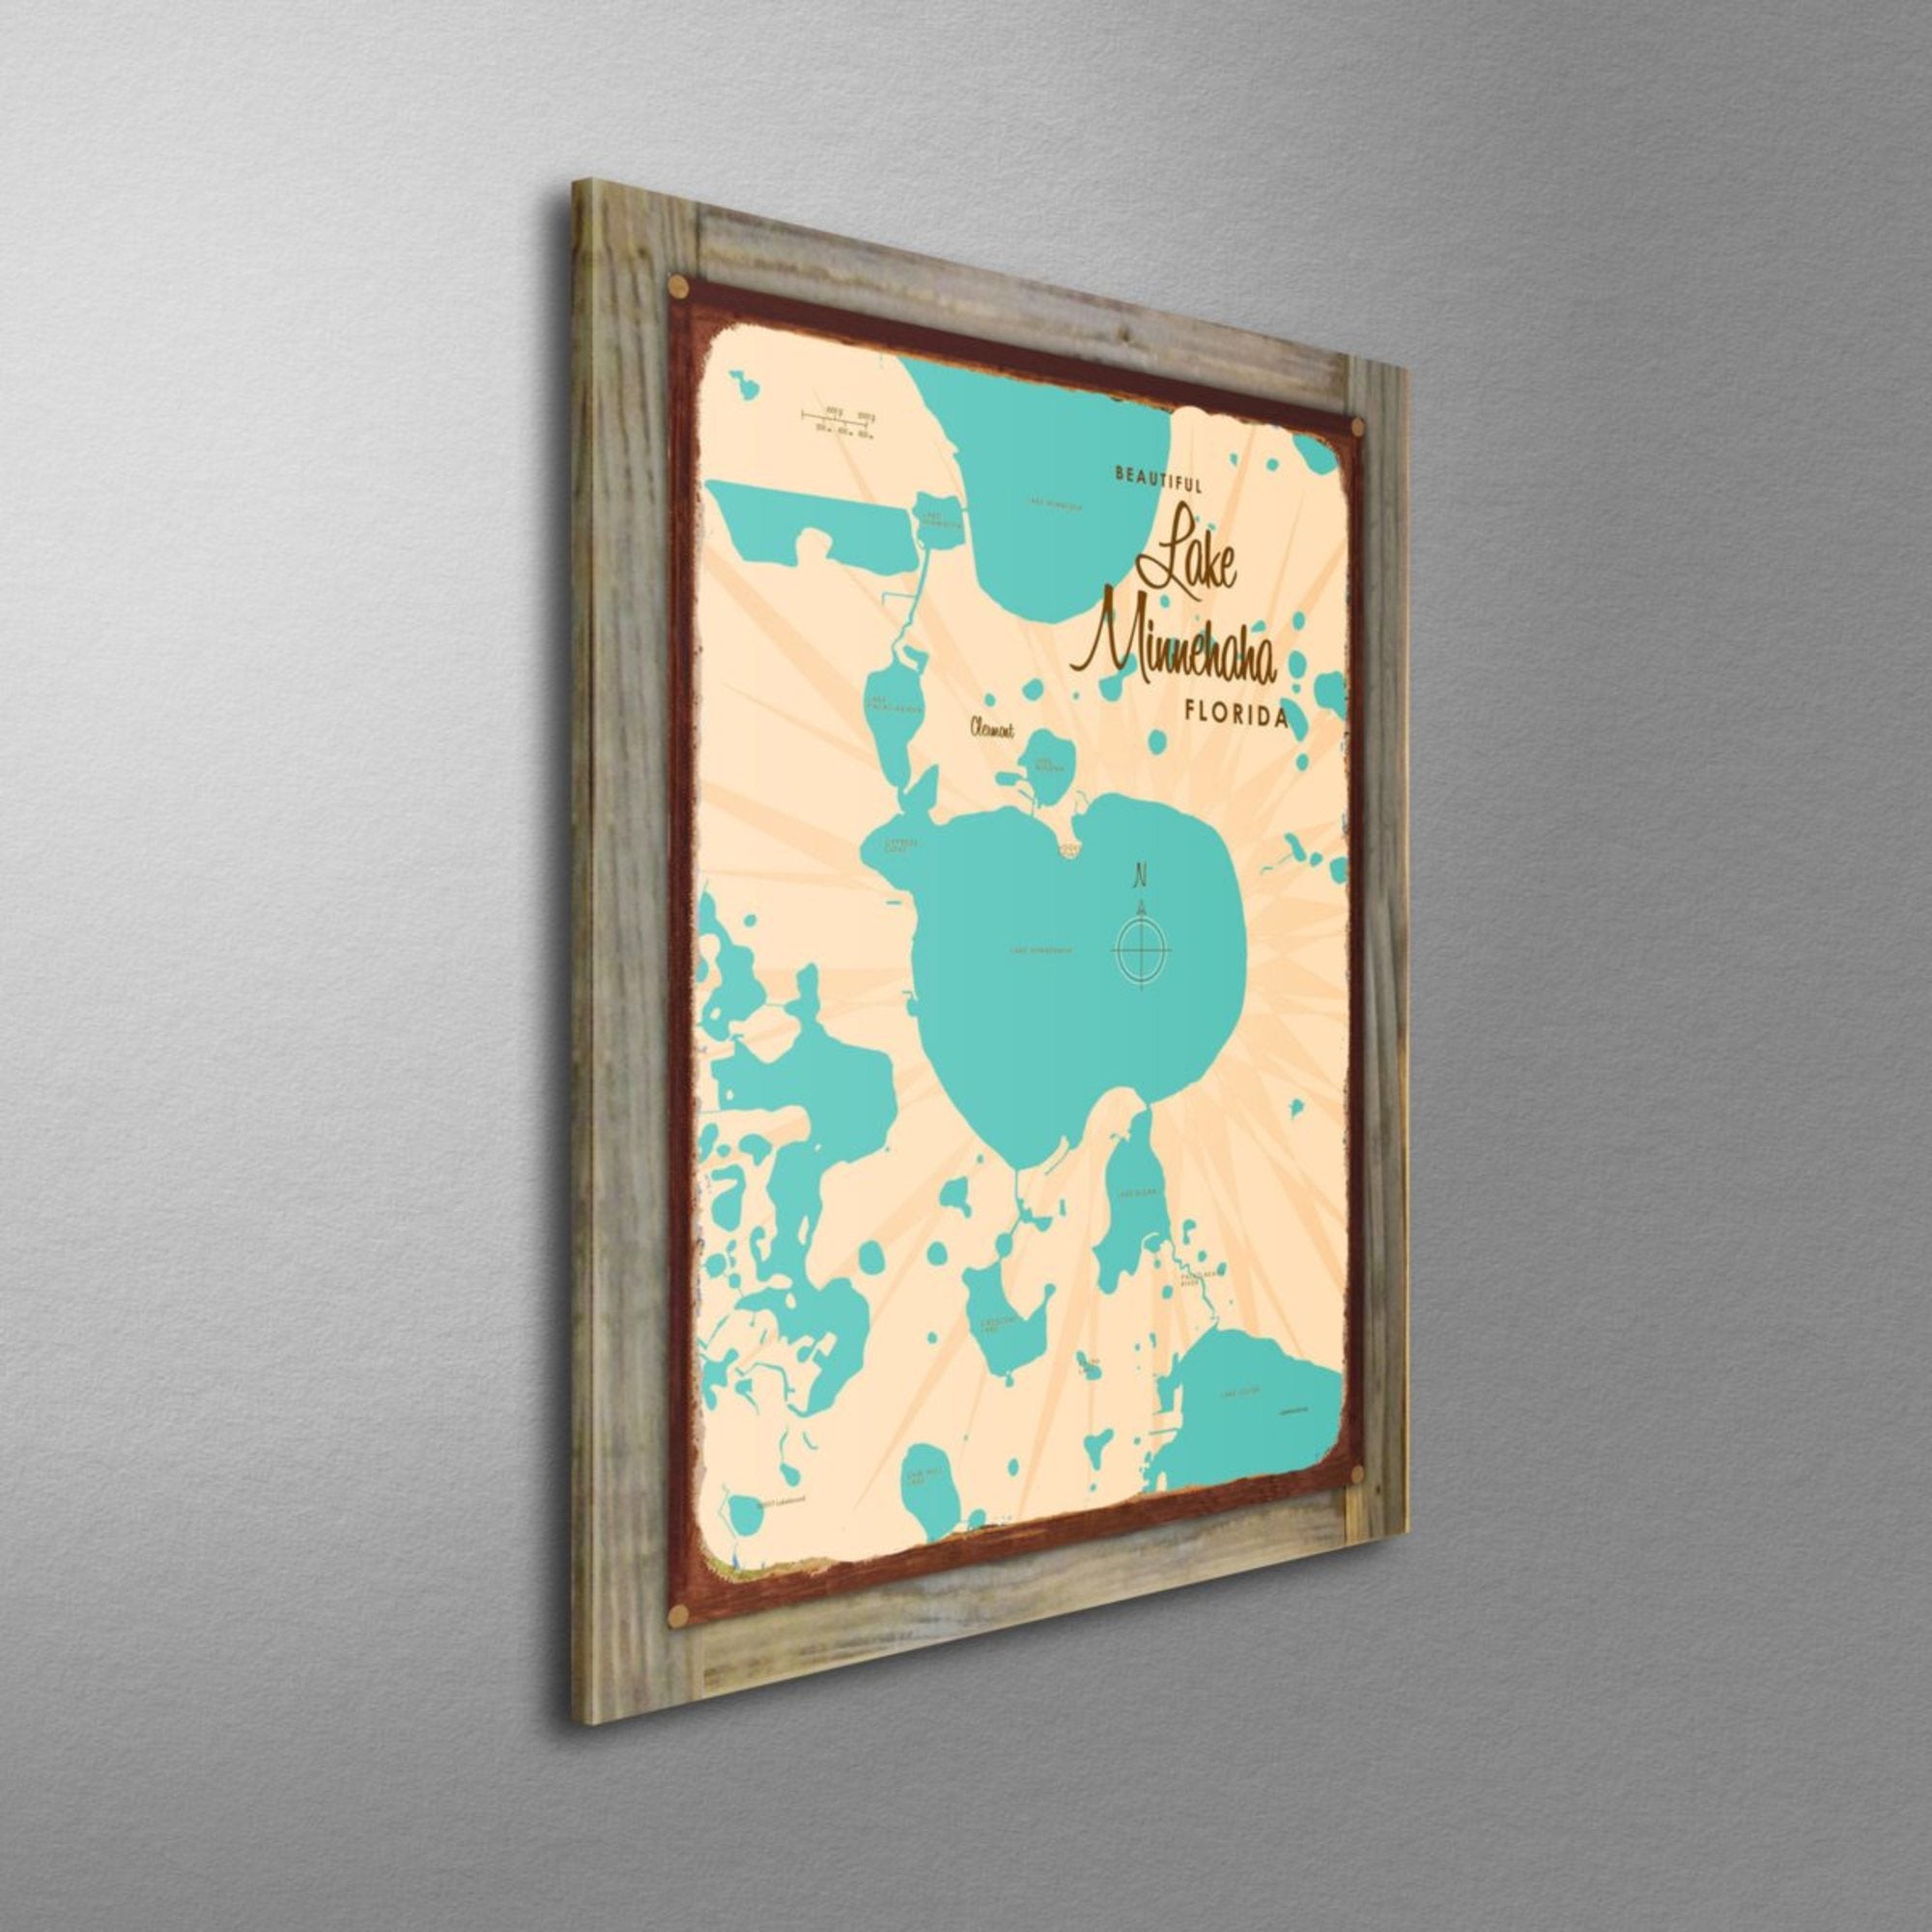 Lake Minnehaha Florida, Wood-Mounted Rustic Metal Sign Map Art